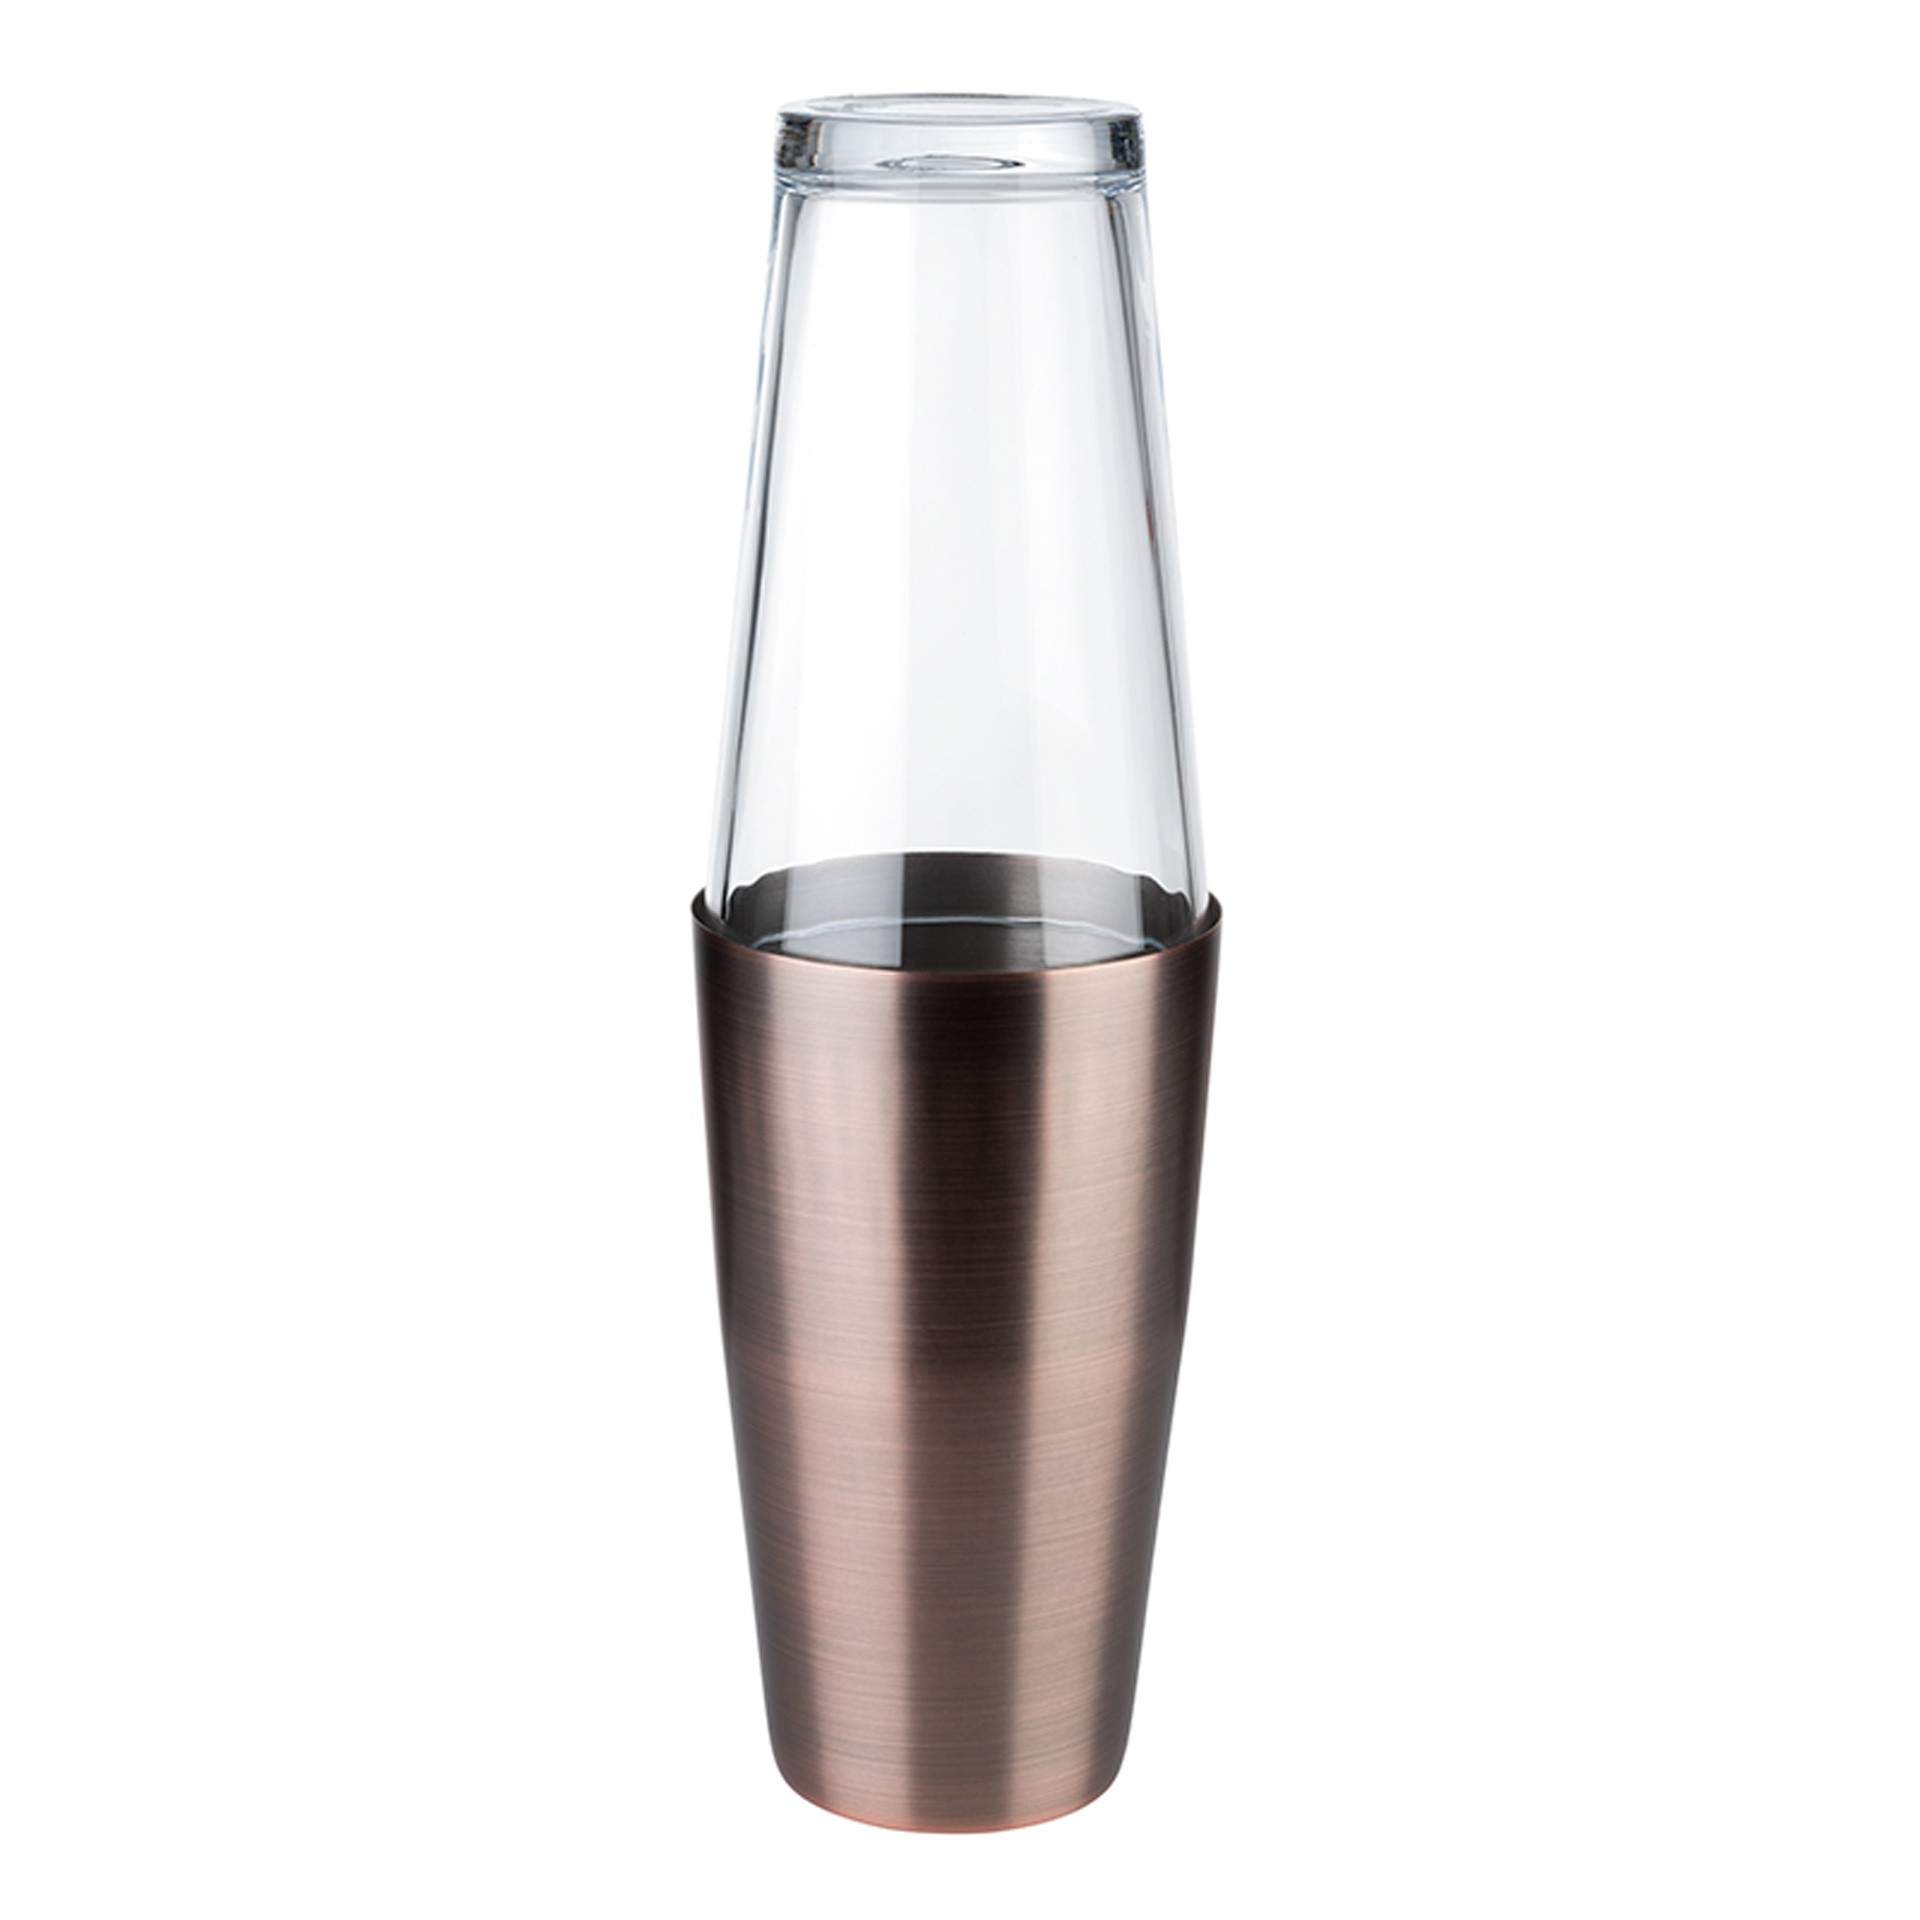 Boston Shaker - hochglanzpoliert - kupferoptik - Abm. 30 cm - Ø 9,0 cm - Inhalt 0,70 / 0,40 l - Edelstahl - 93325-B